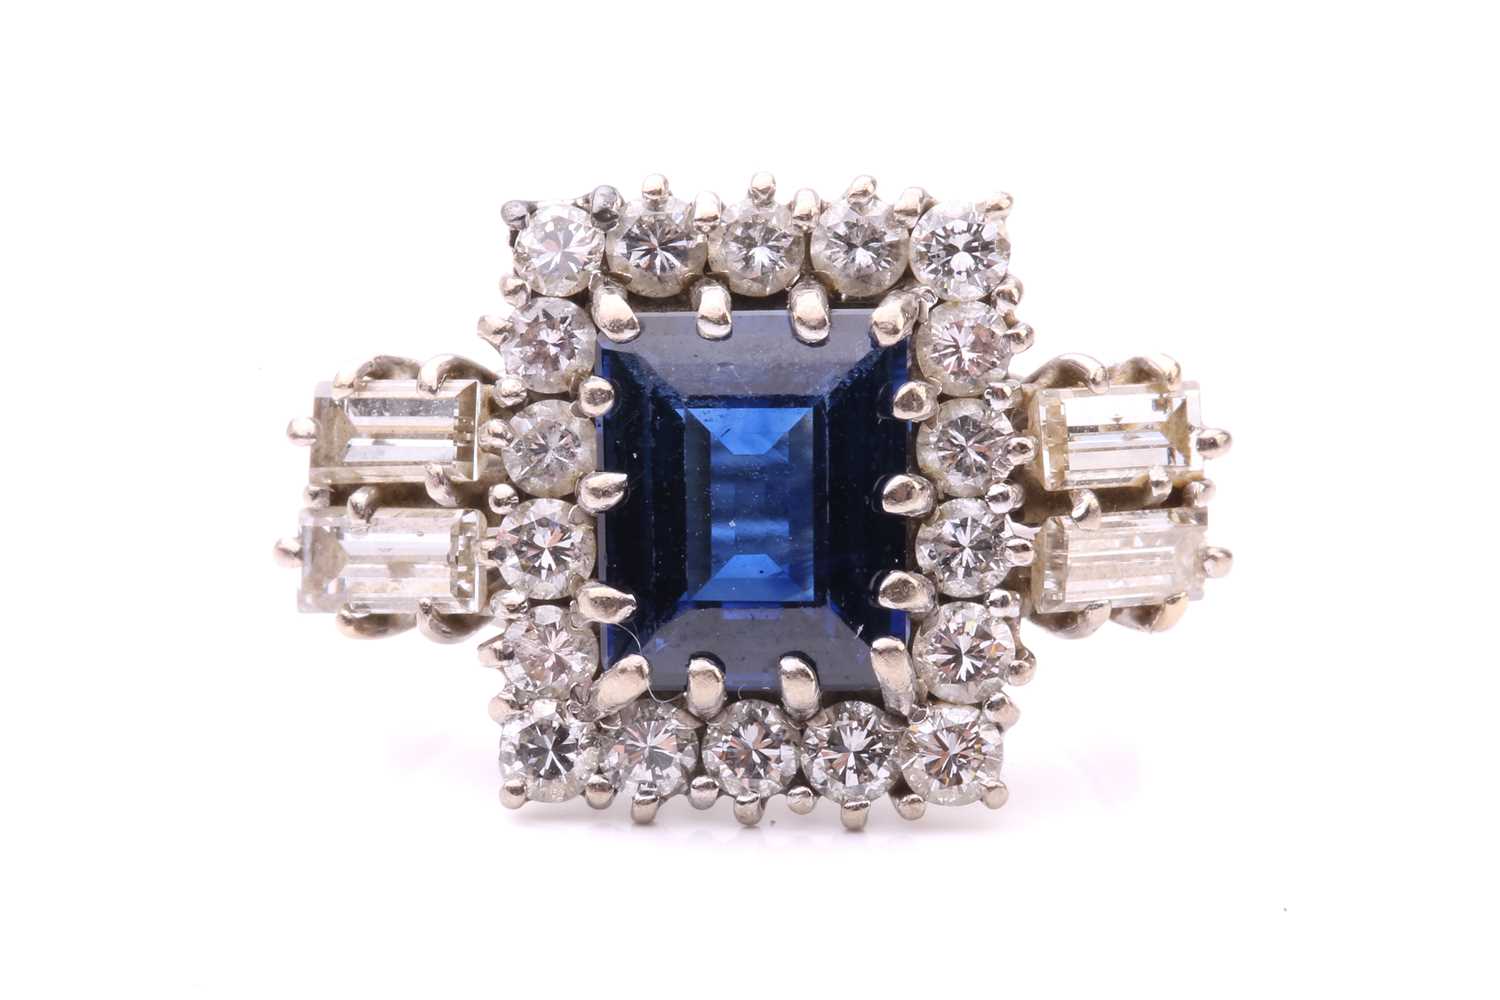 A sapphire and diamond entourage ring, featuring a rectangular step-cut sapphire of deep blue